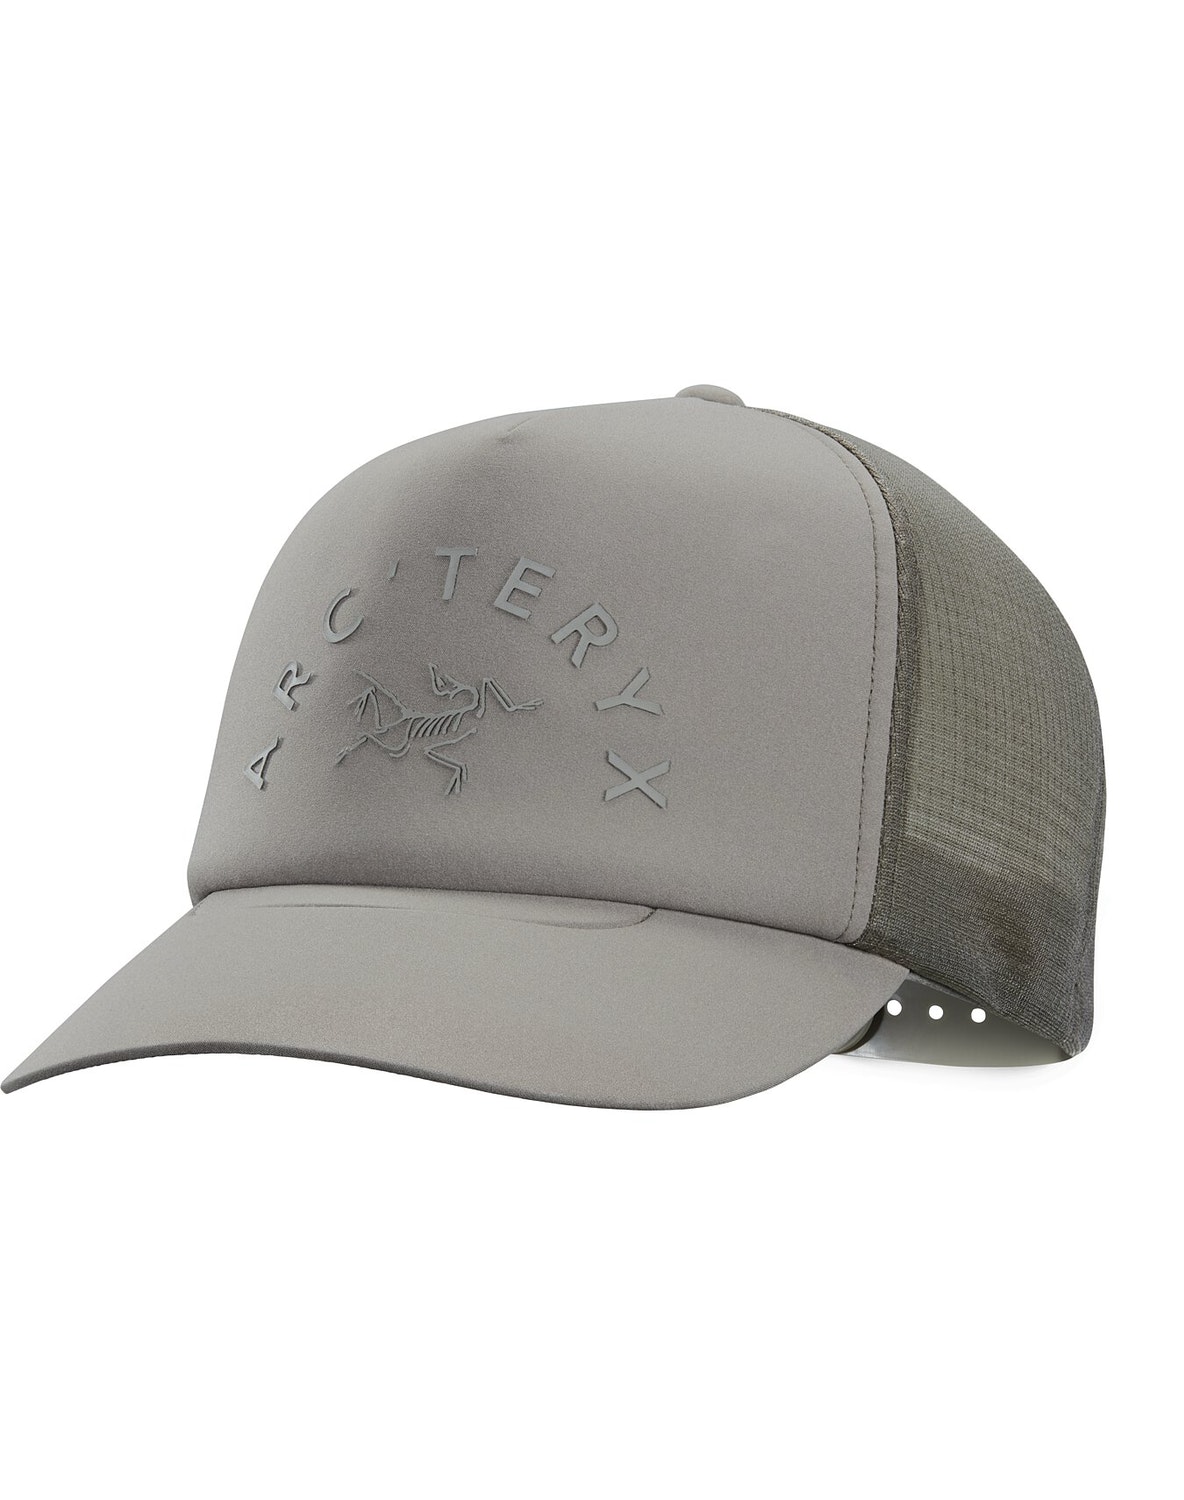 Hats Arc'teryx Arch'teryx Curved Brim Donna Marroni Chiaro - IT-4333963